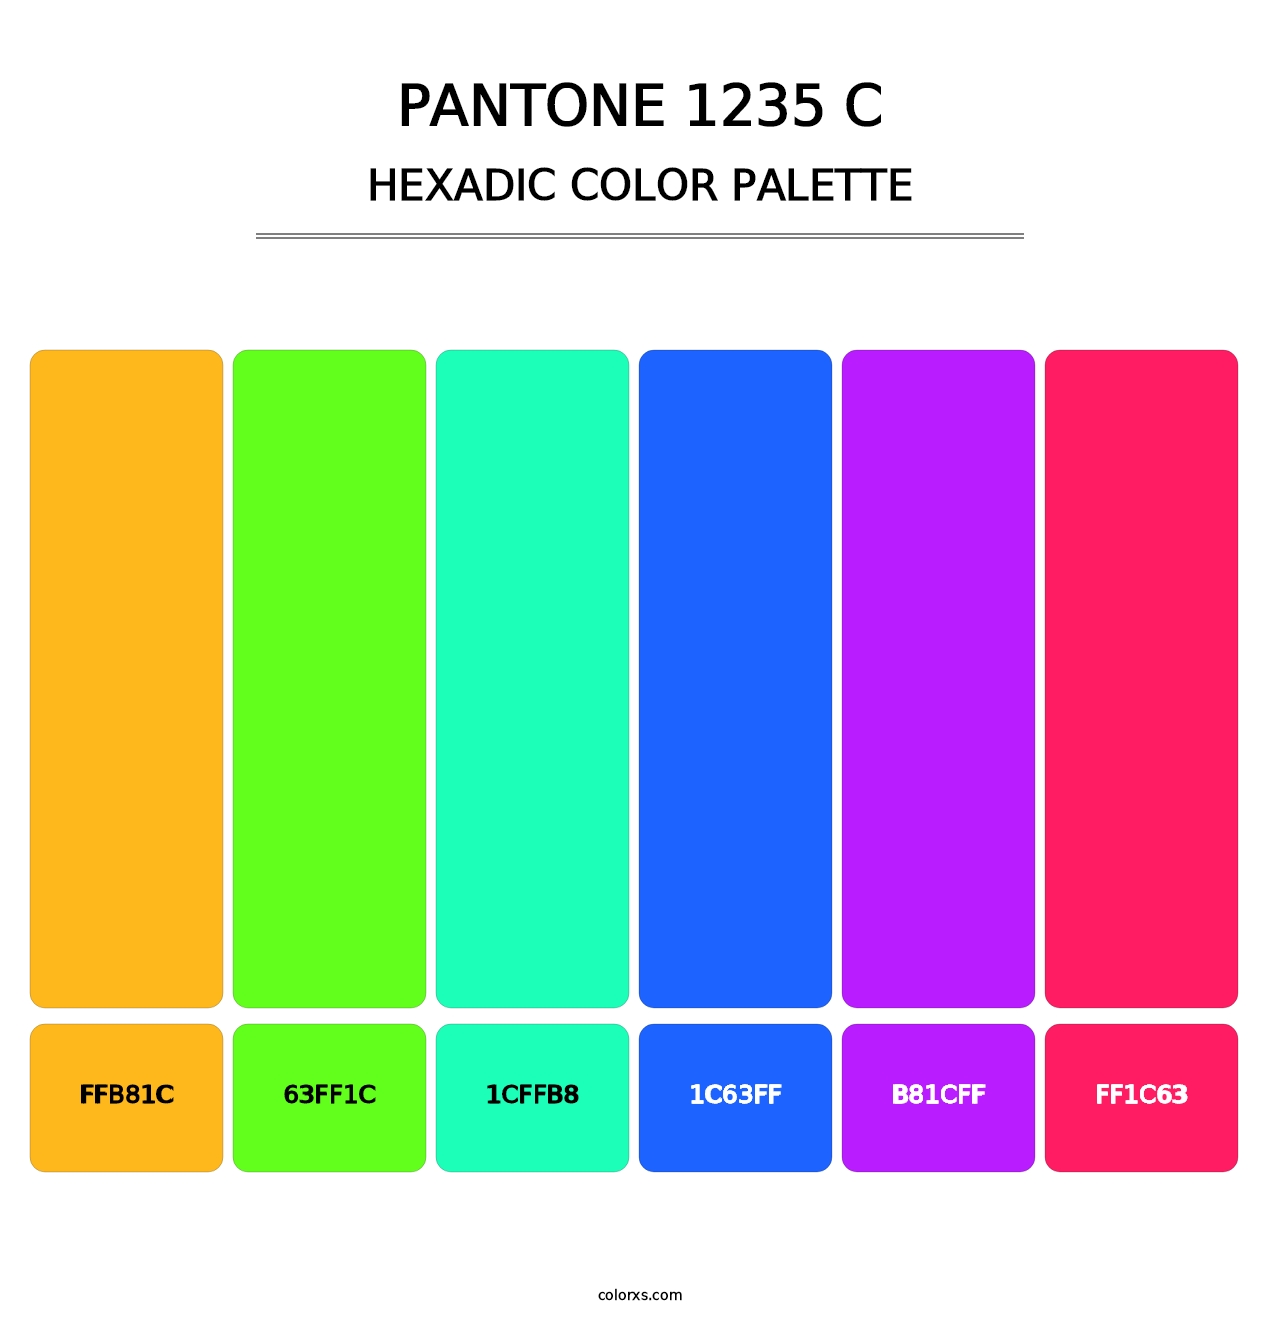 PANTONE 1235 C - Hexadic Color Palette